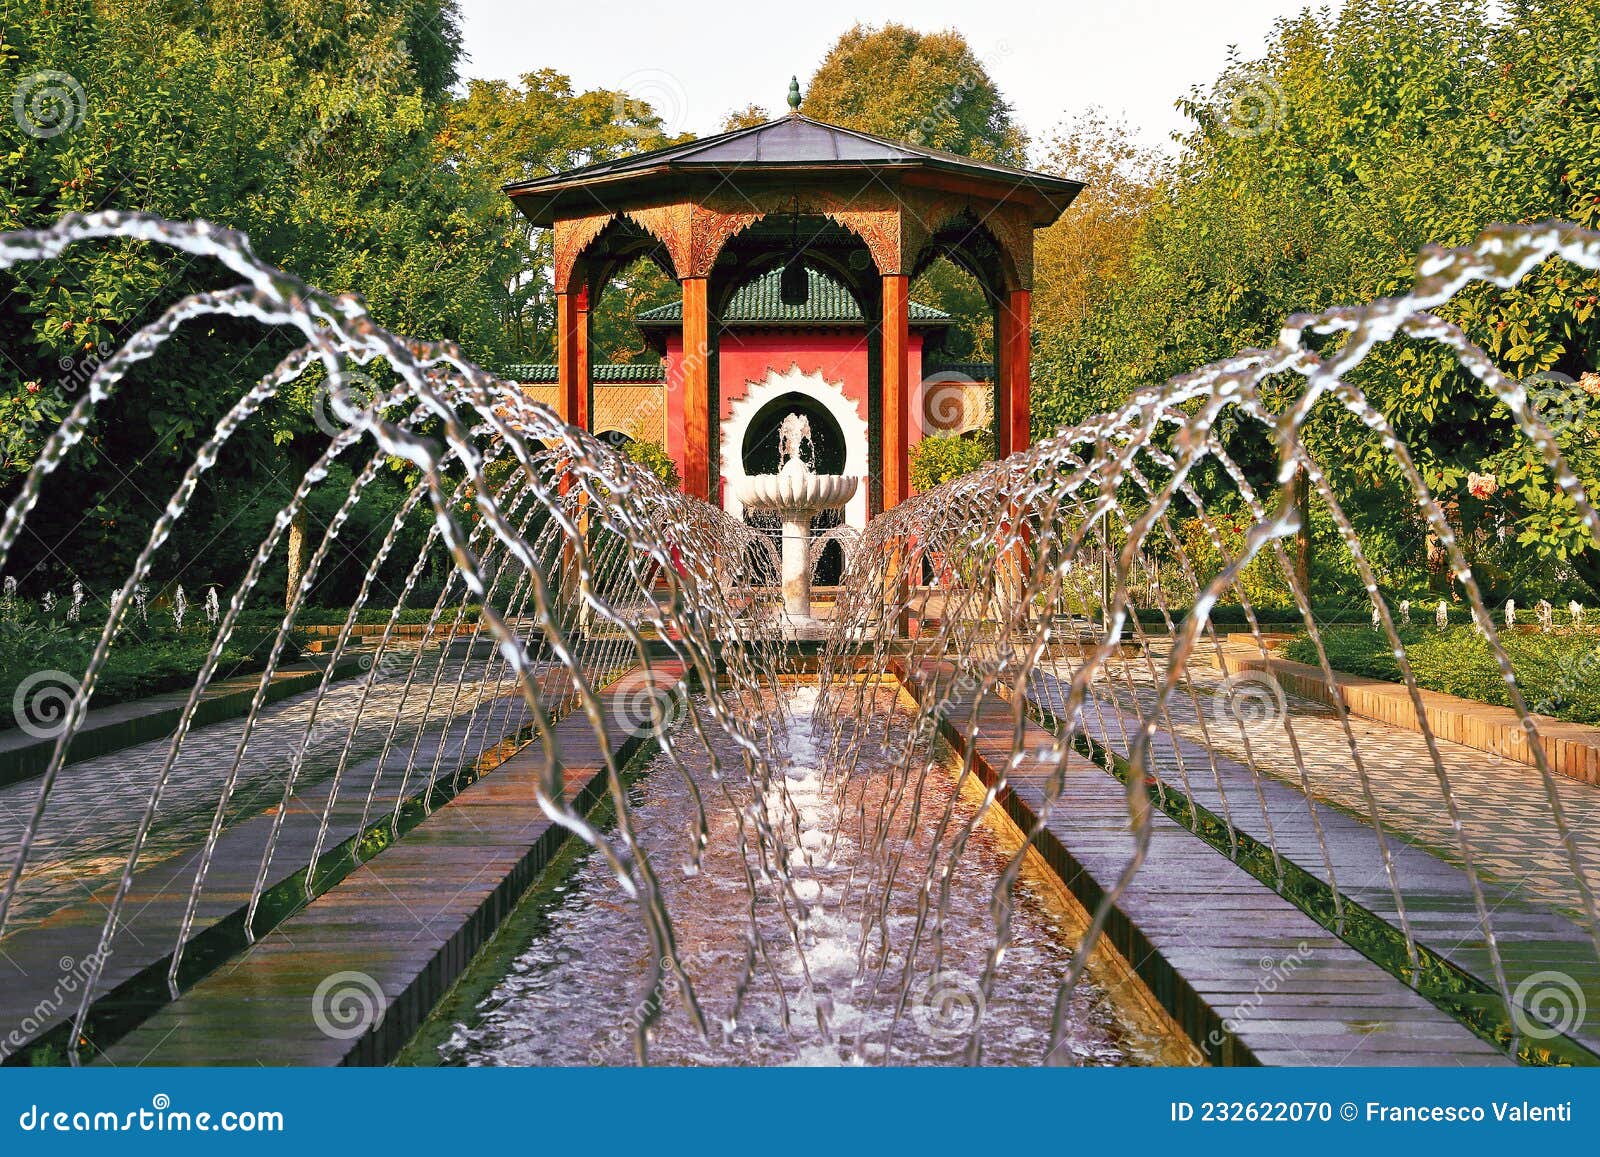 garten der welt (garden of world) berlin: oriental islamic fountain